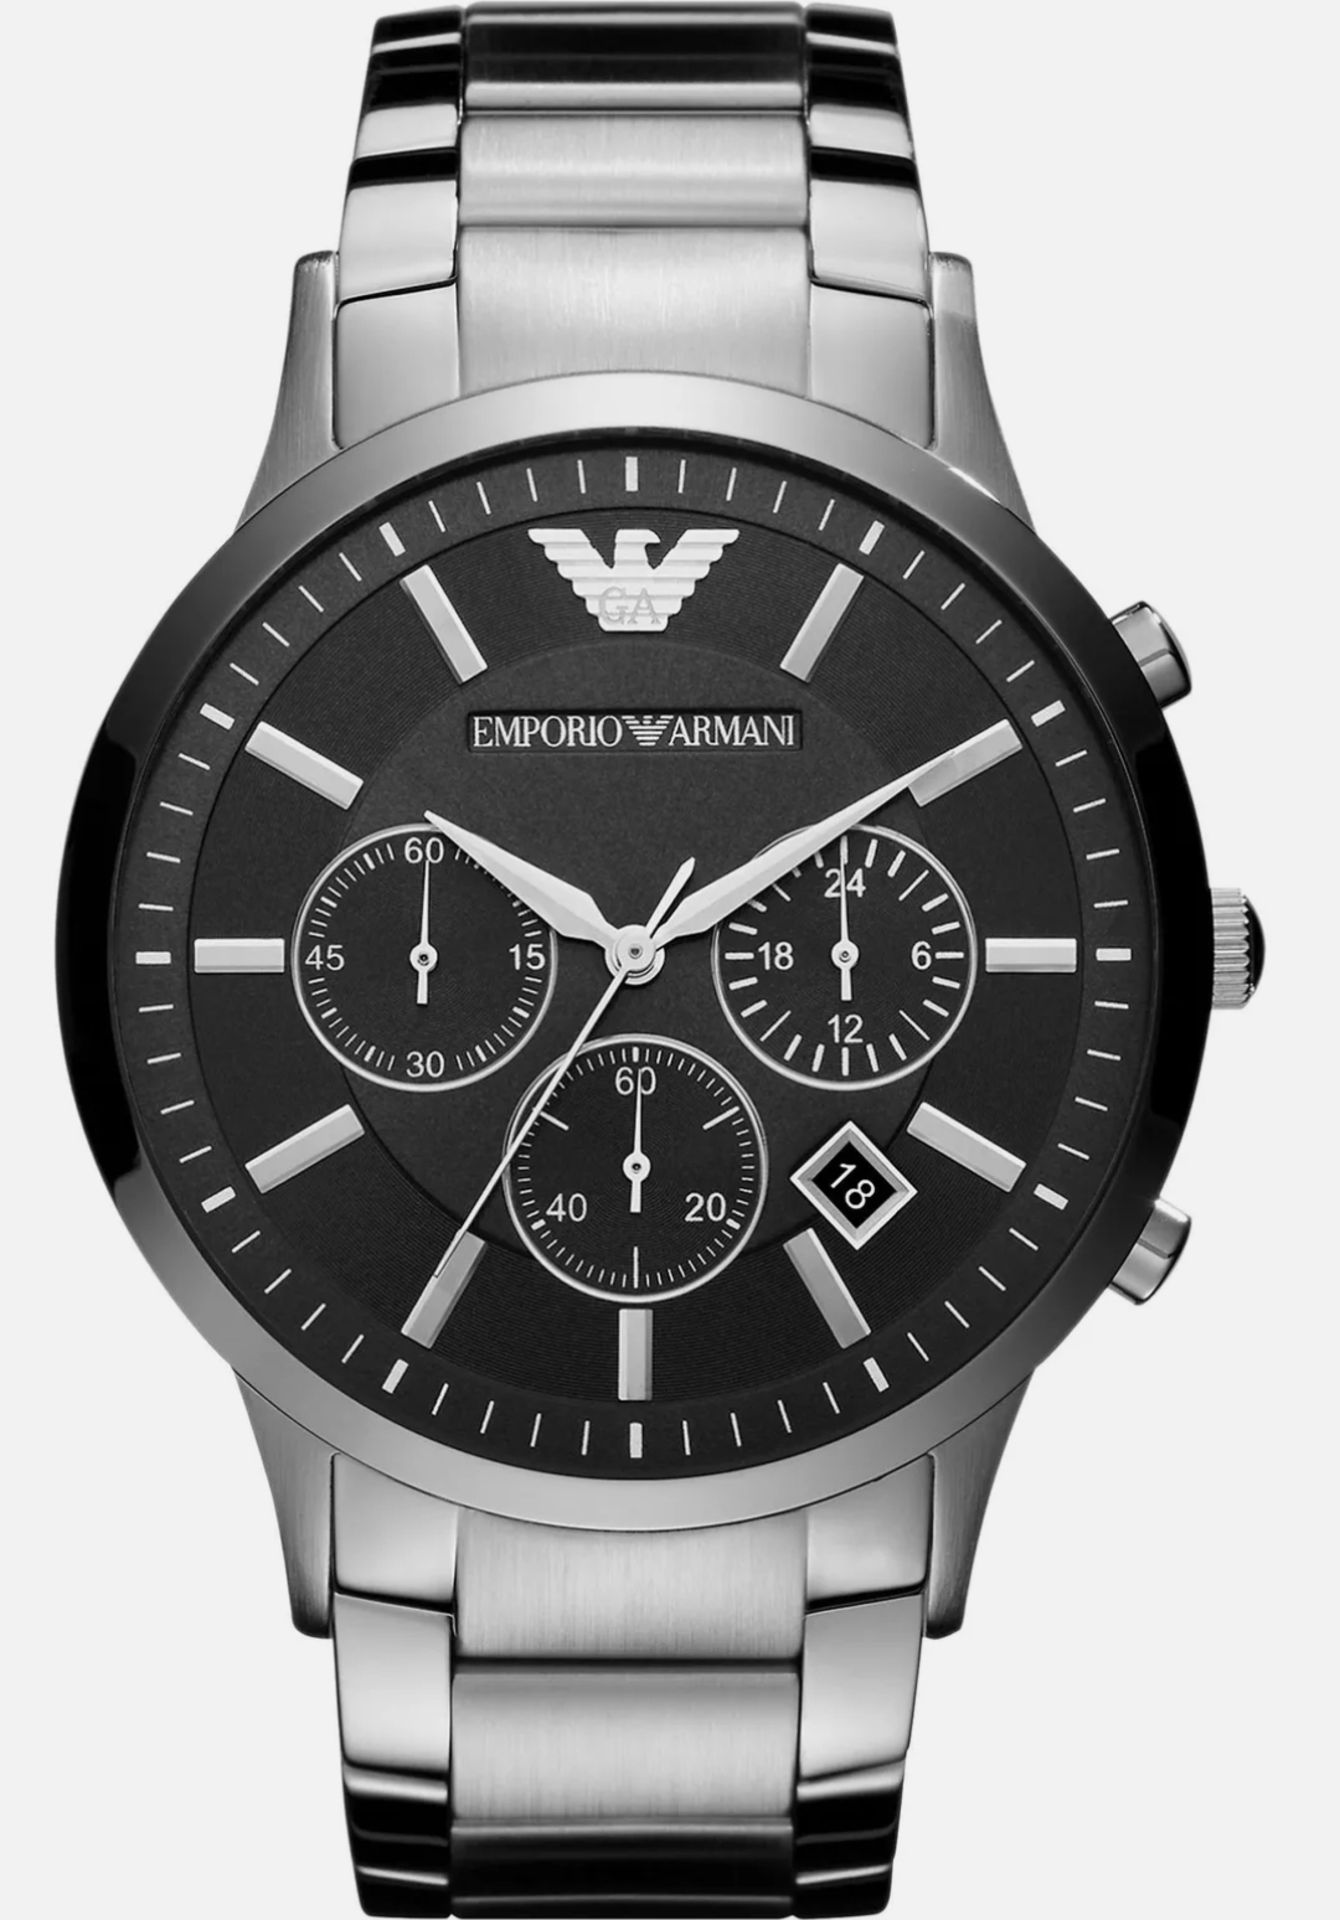 Emporio Armani AR2460 Men's Black Face Stainless Steel Bracelet Chronograph Watch - Image 5 of 8